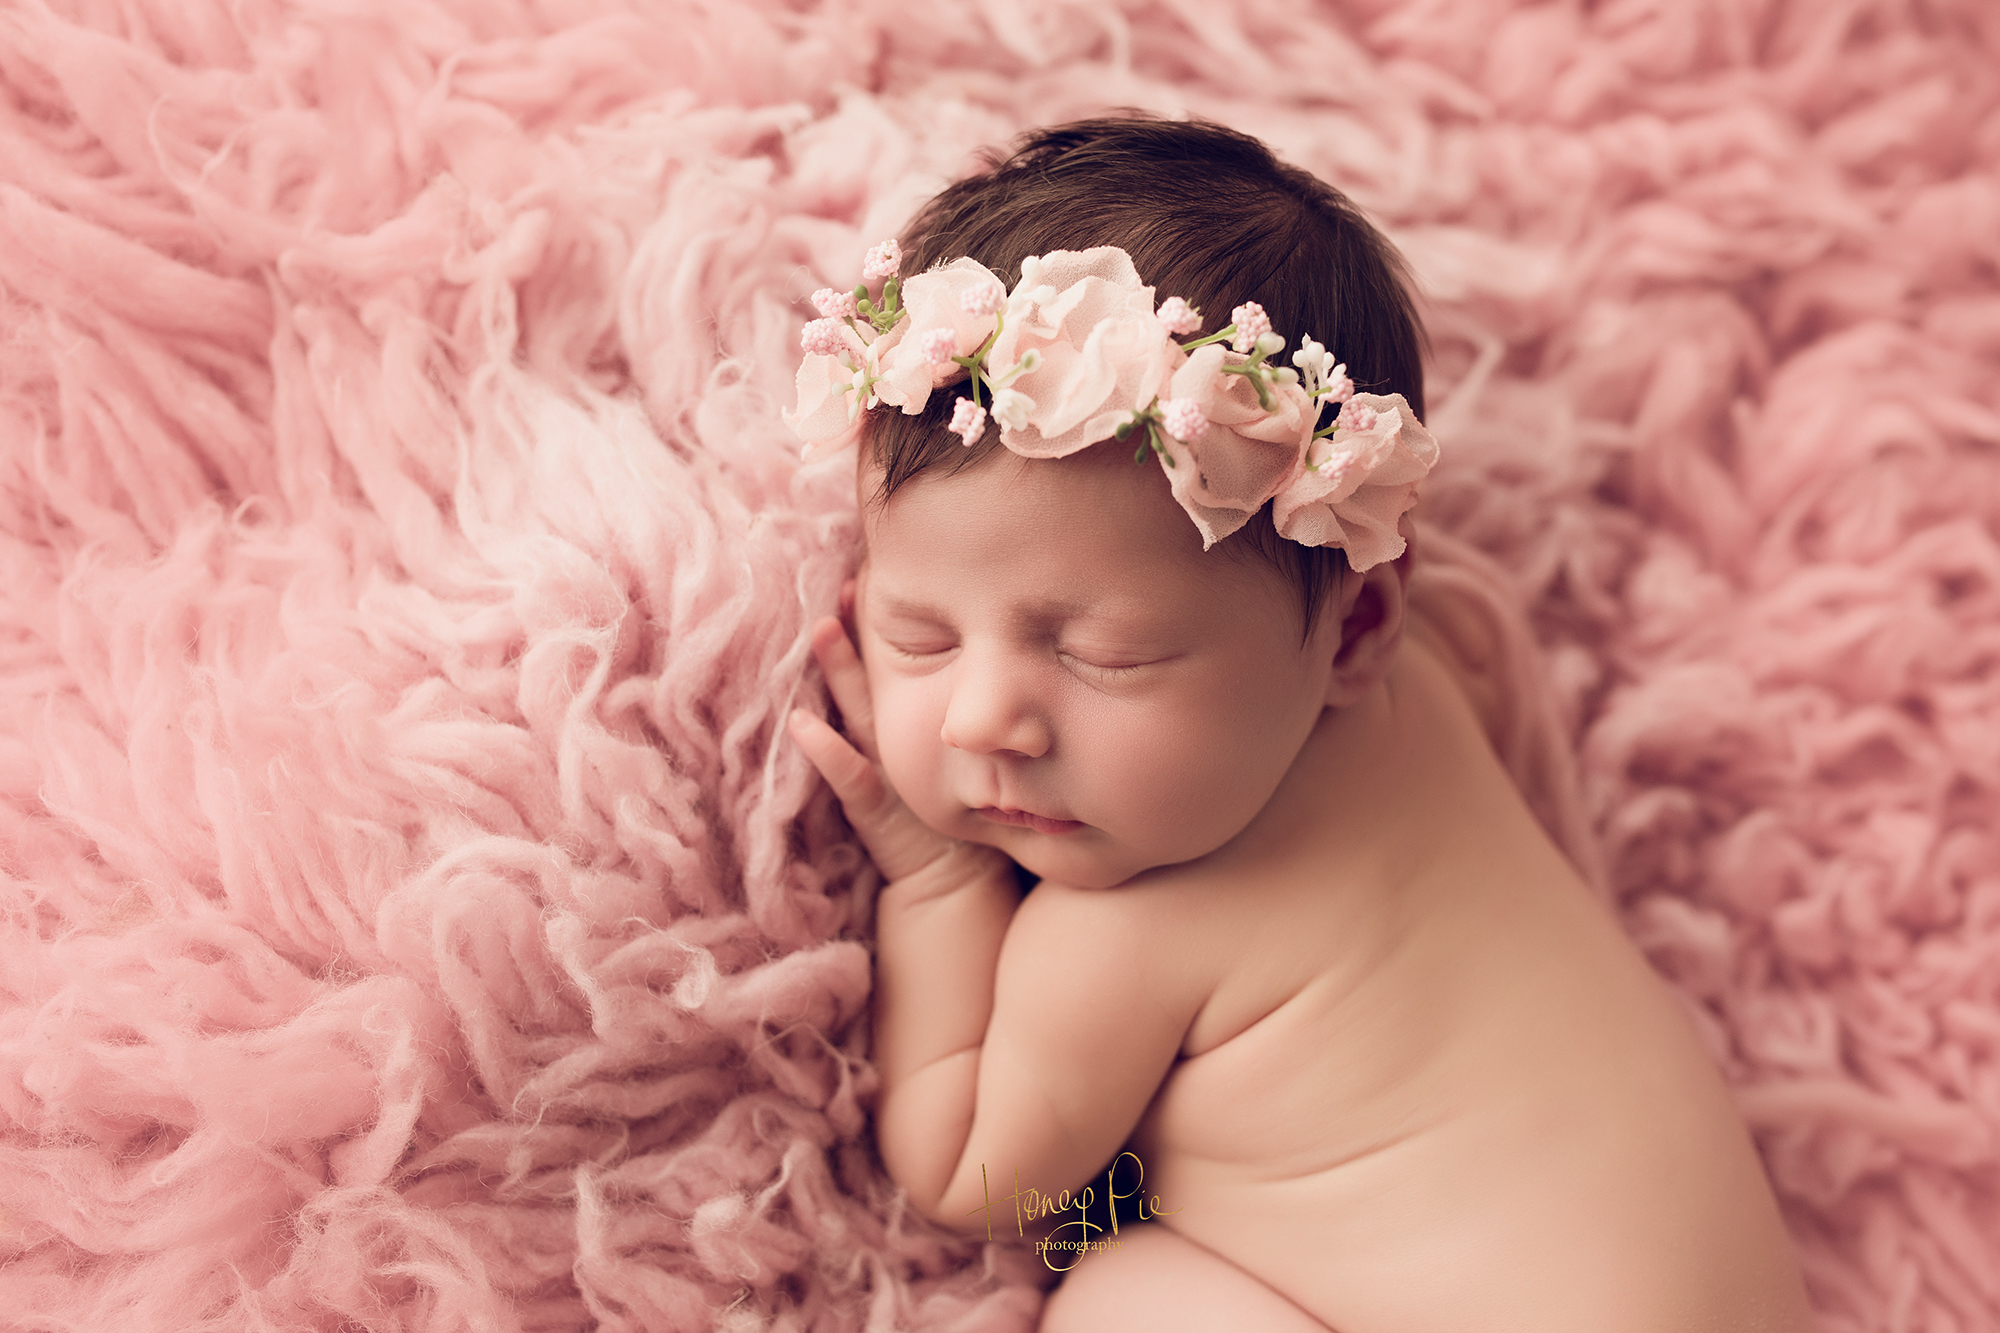 Sleeping newborn baby girl on a pink fluffy blanket wearing a pink flower crown during her newborn photoshoot